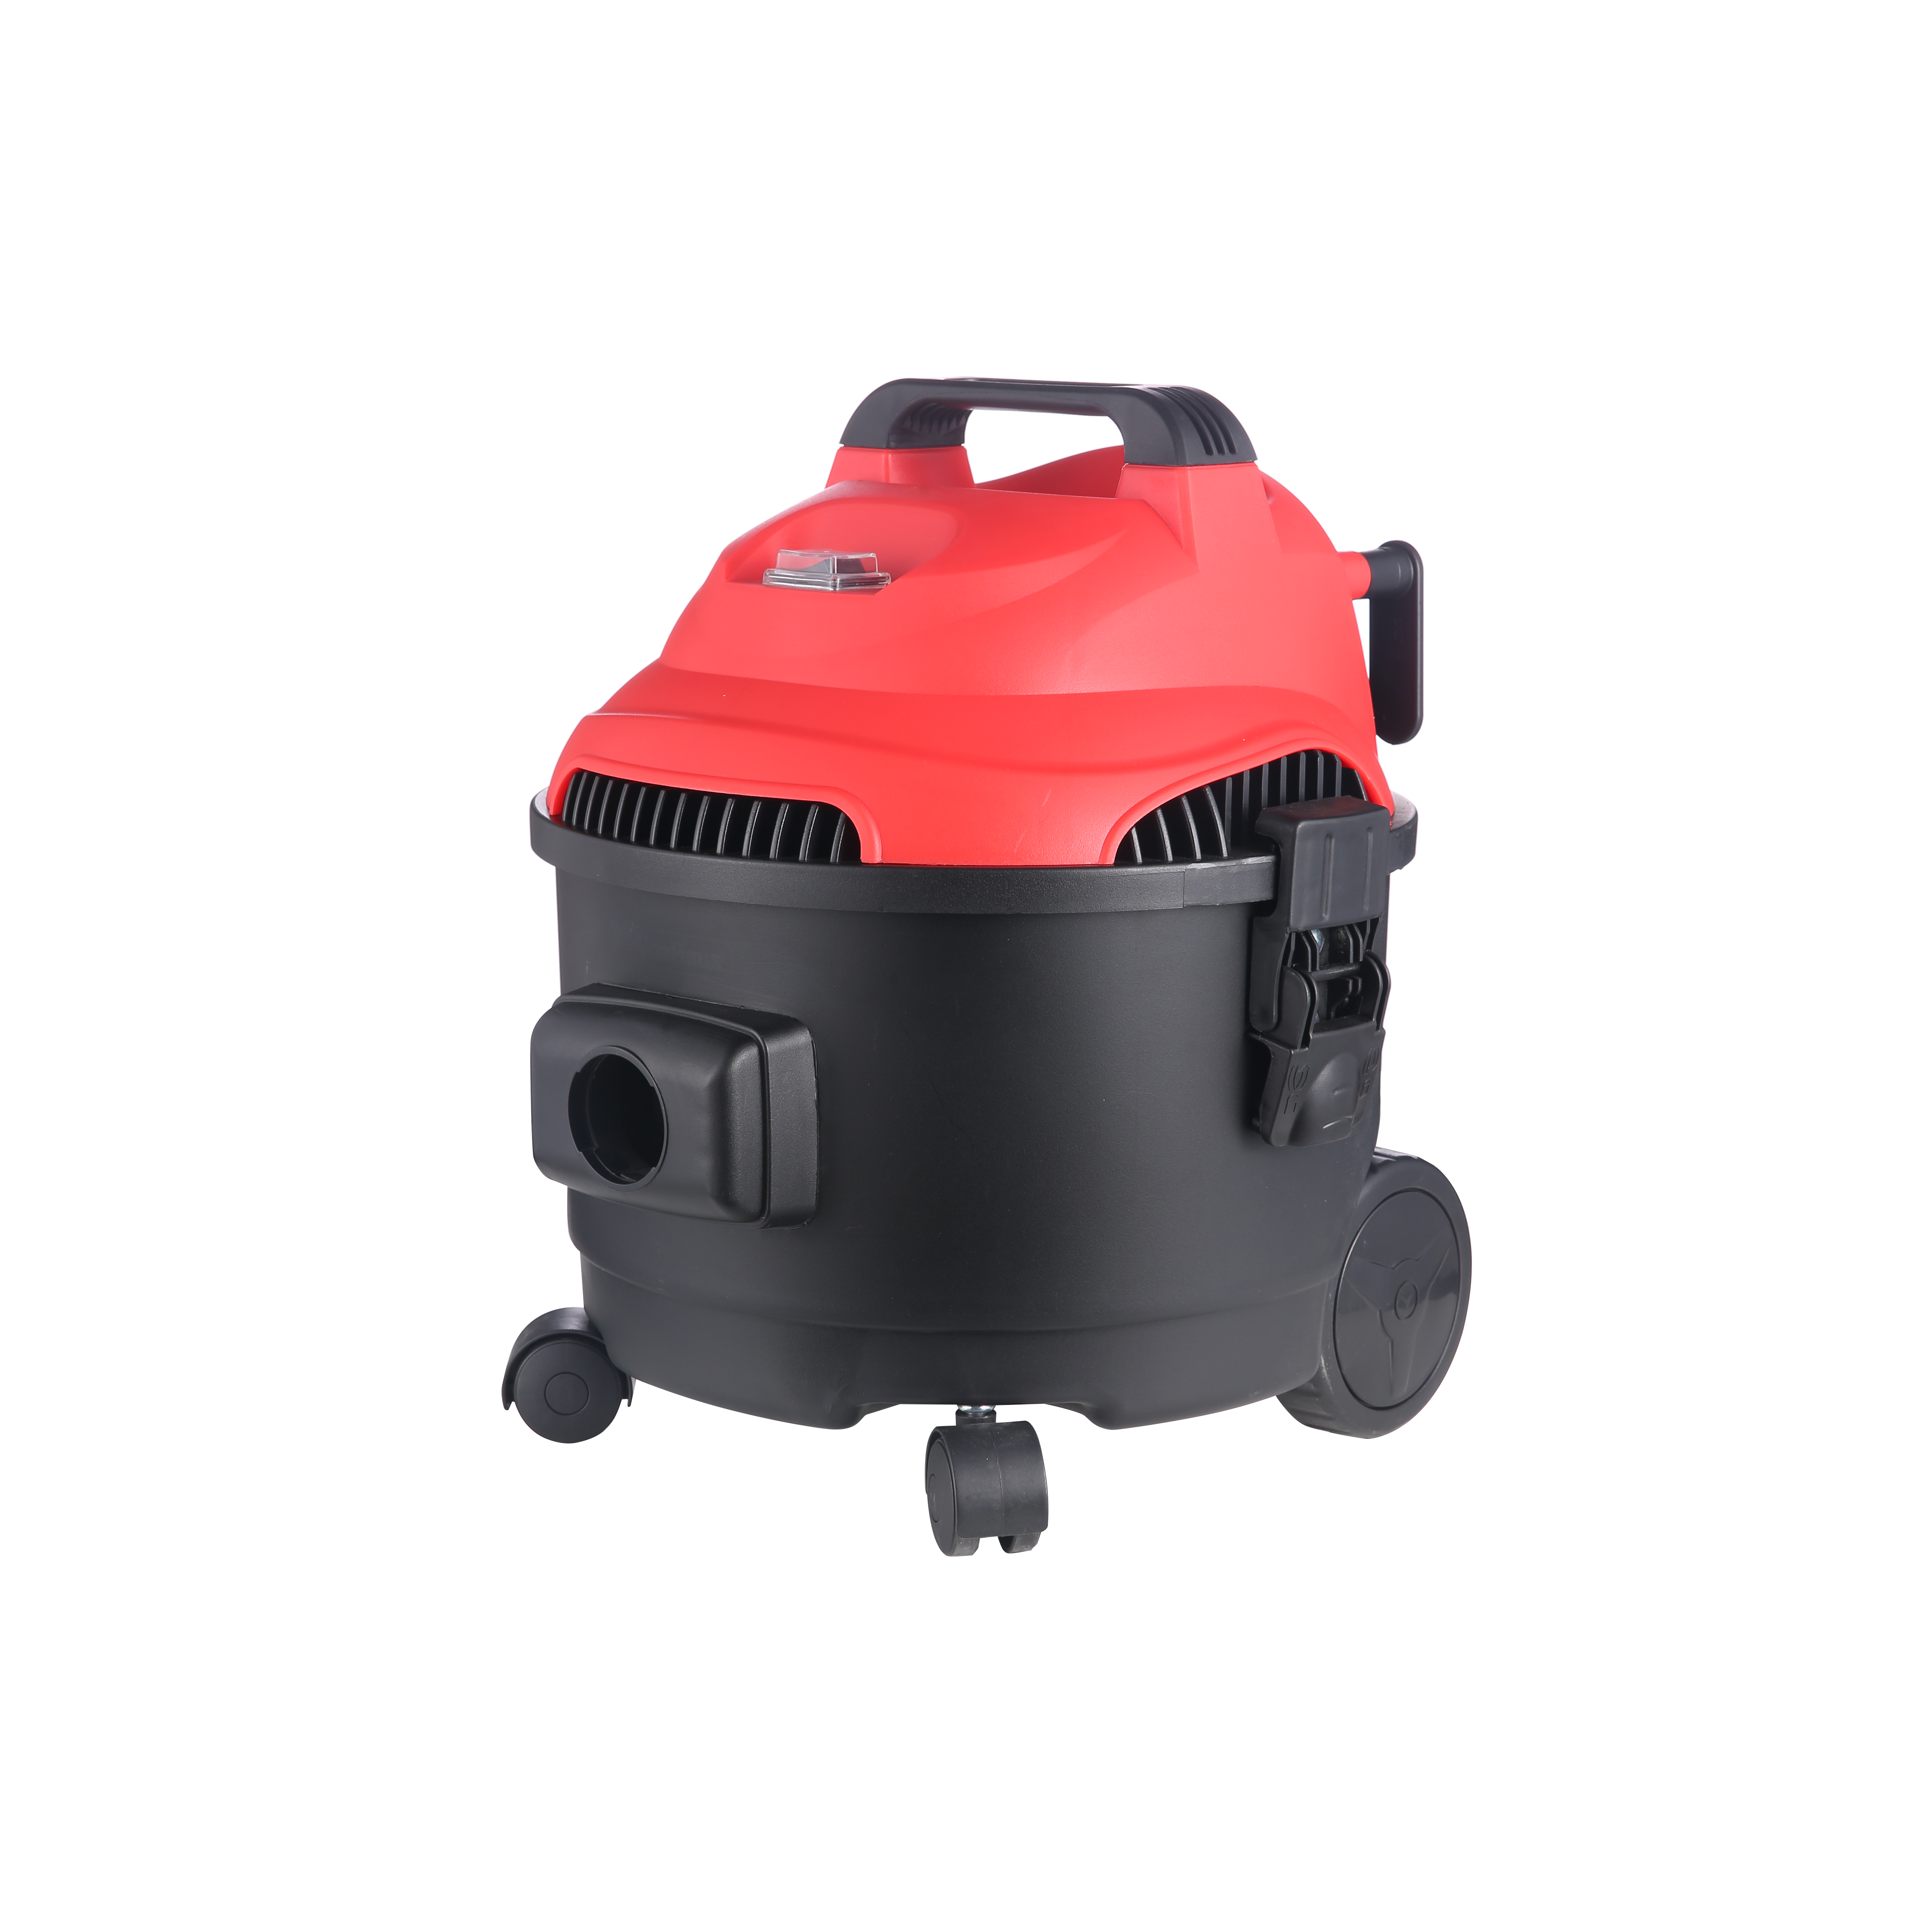 RL128 new design 30L smart home large capacity wet dry vacuum cleaner